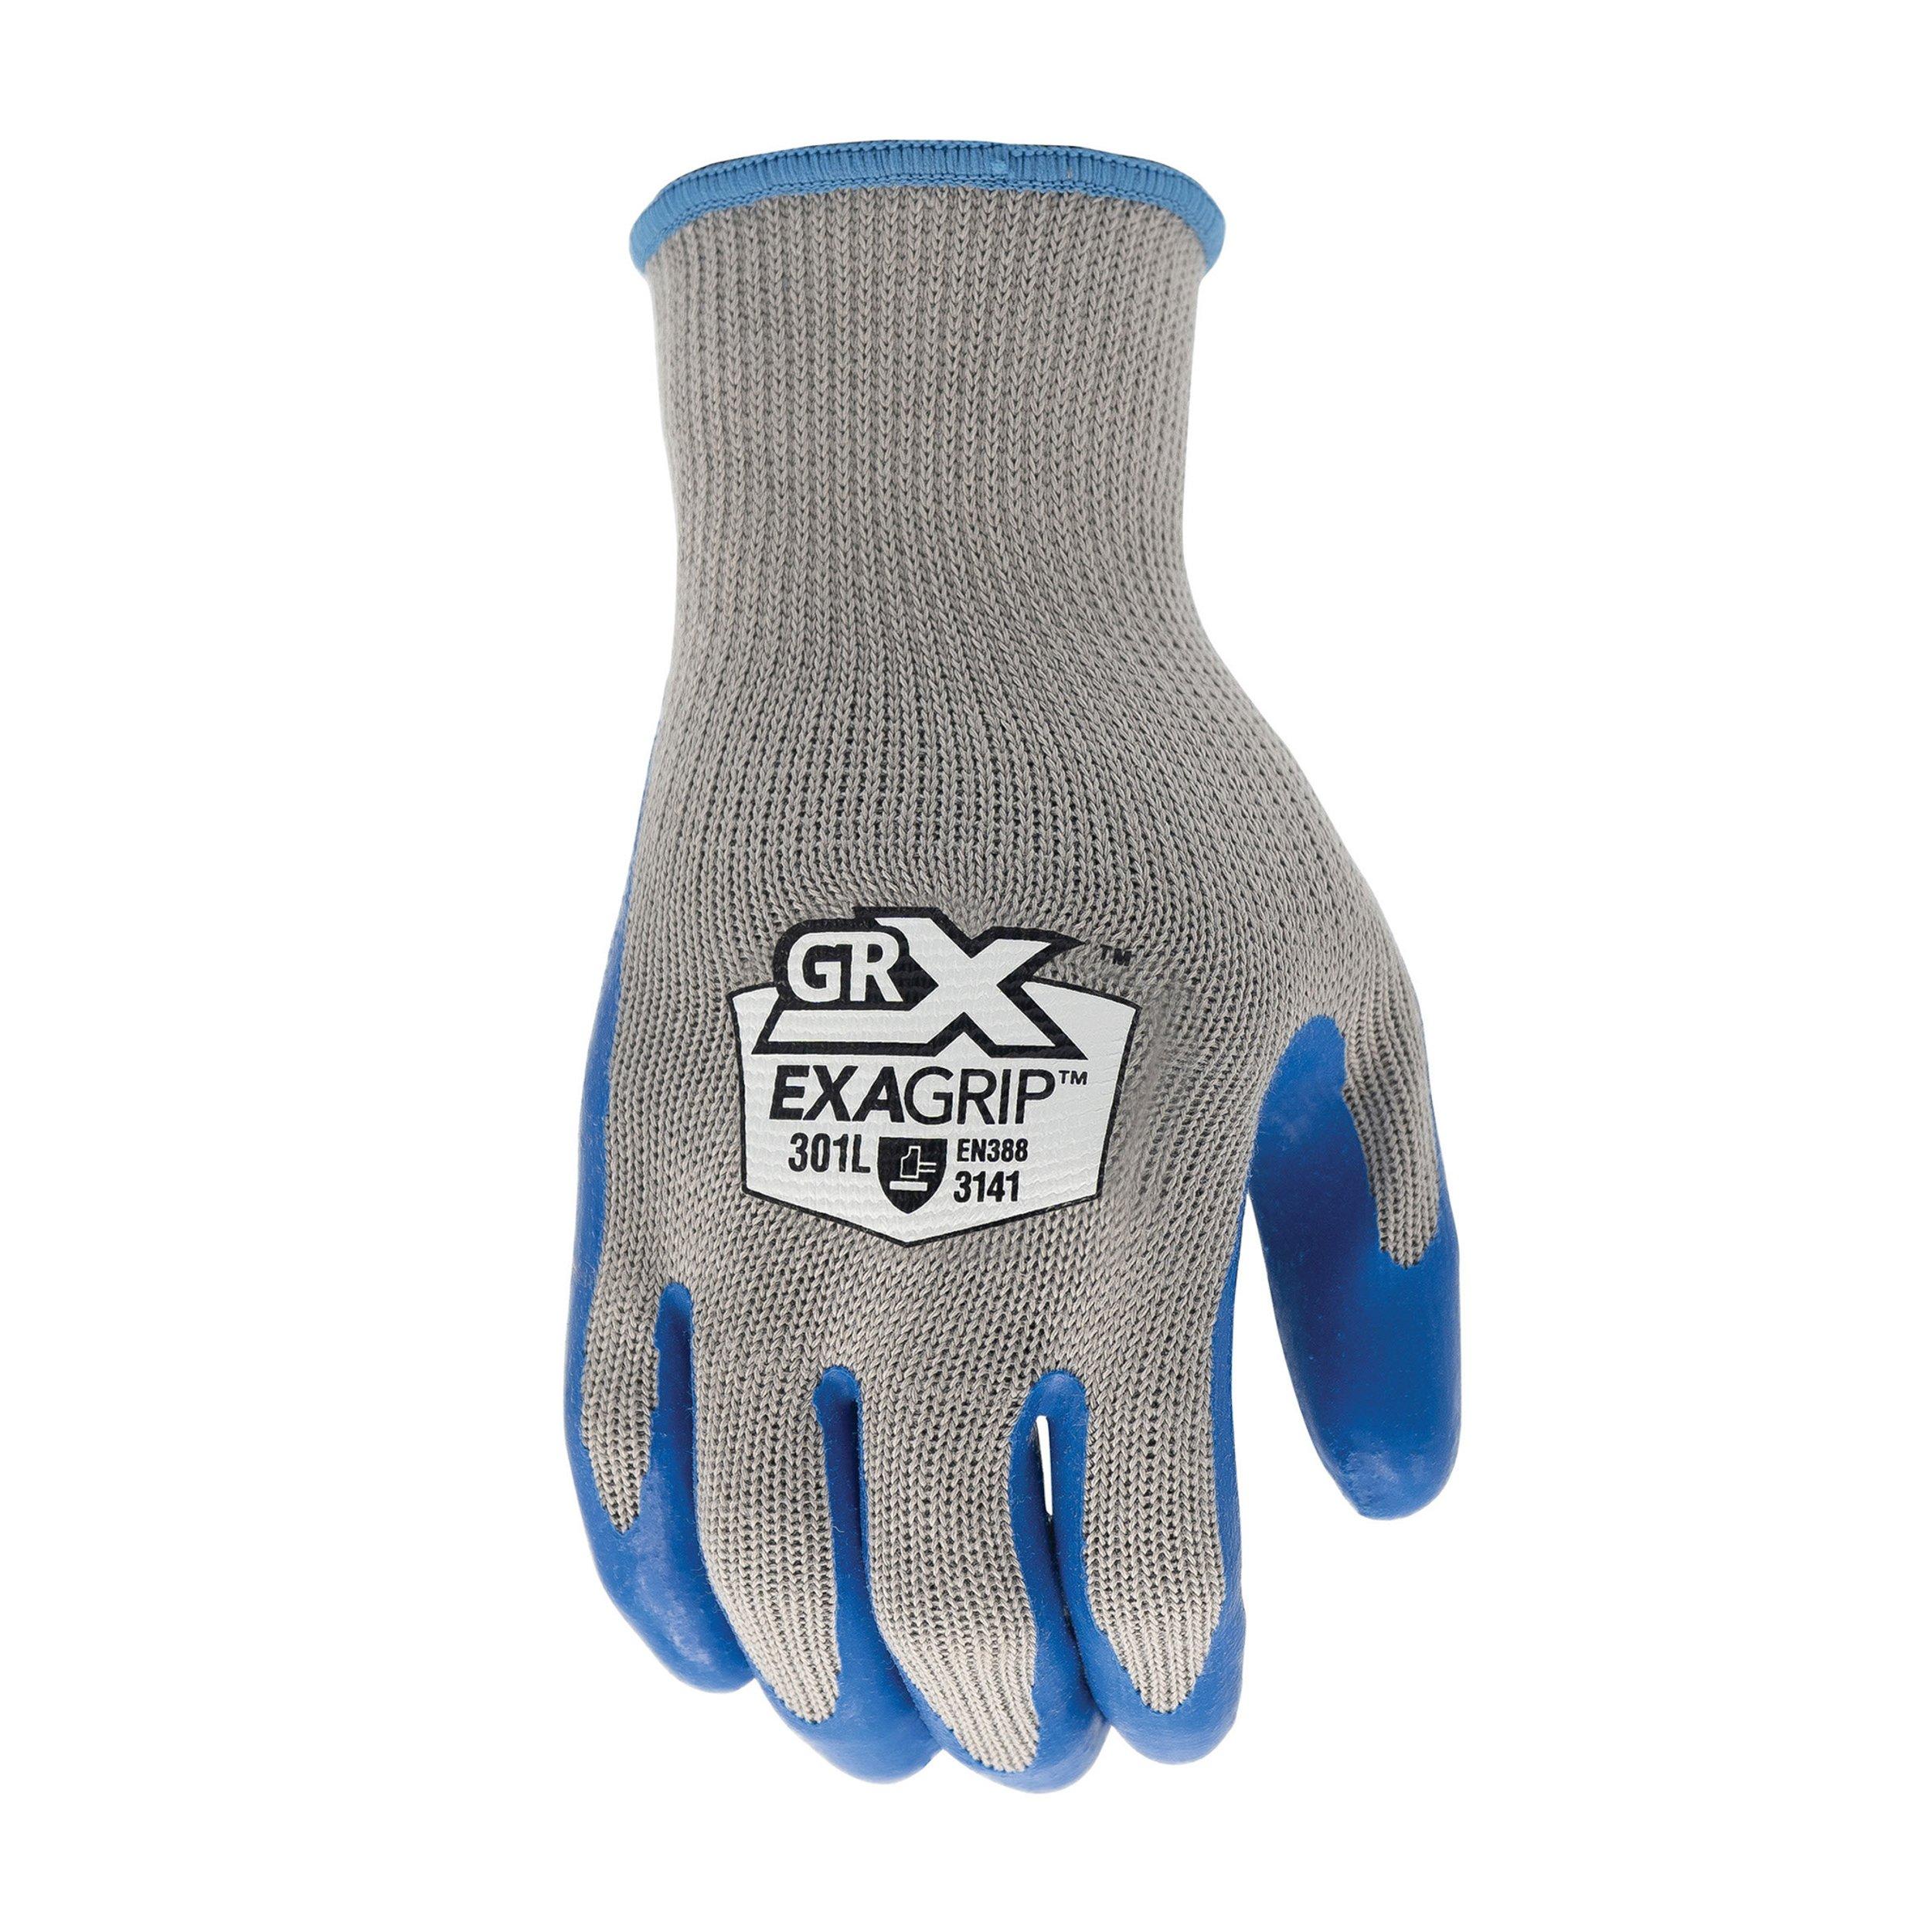 GRX IND301 Exagrip Blue Latex Gloves - Xlarge